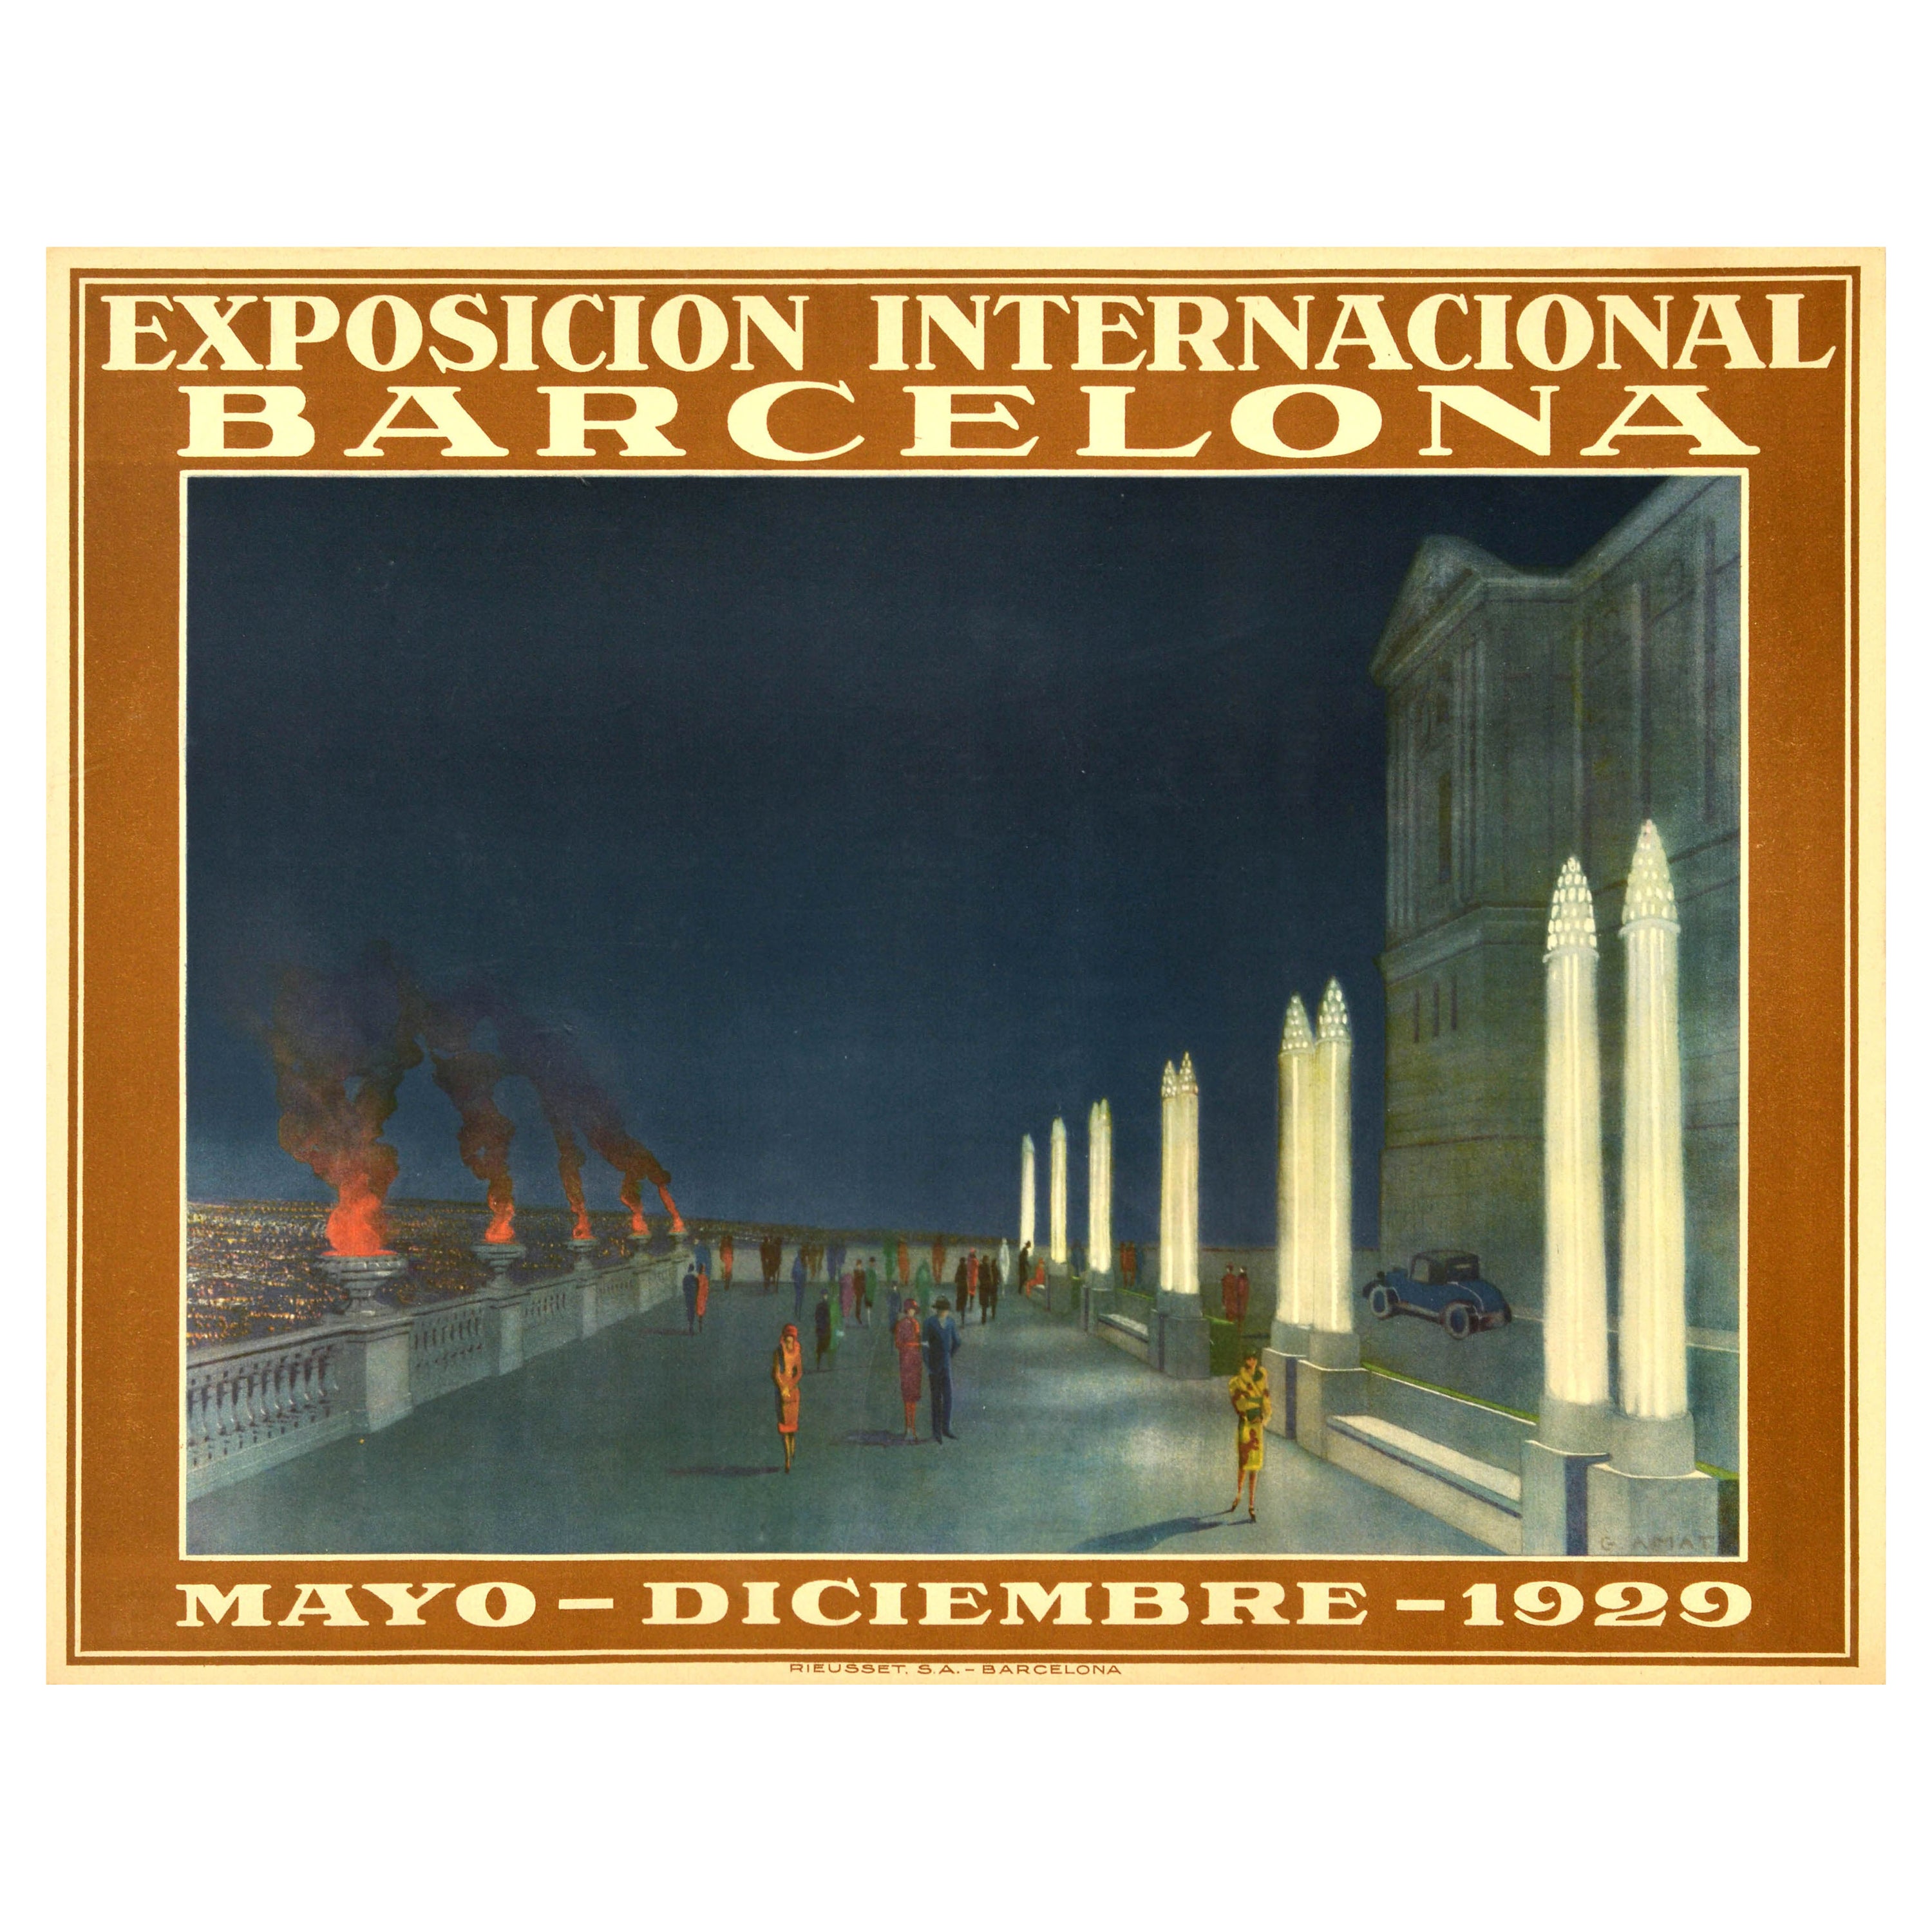 Original Vintage Advertising Poster Barcelona International Exposition 1929 Fair